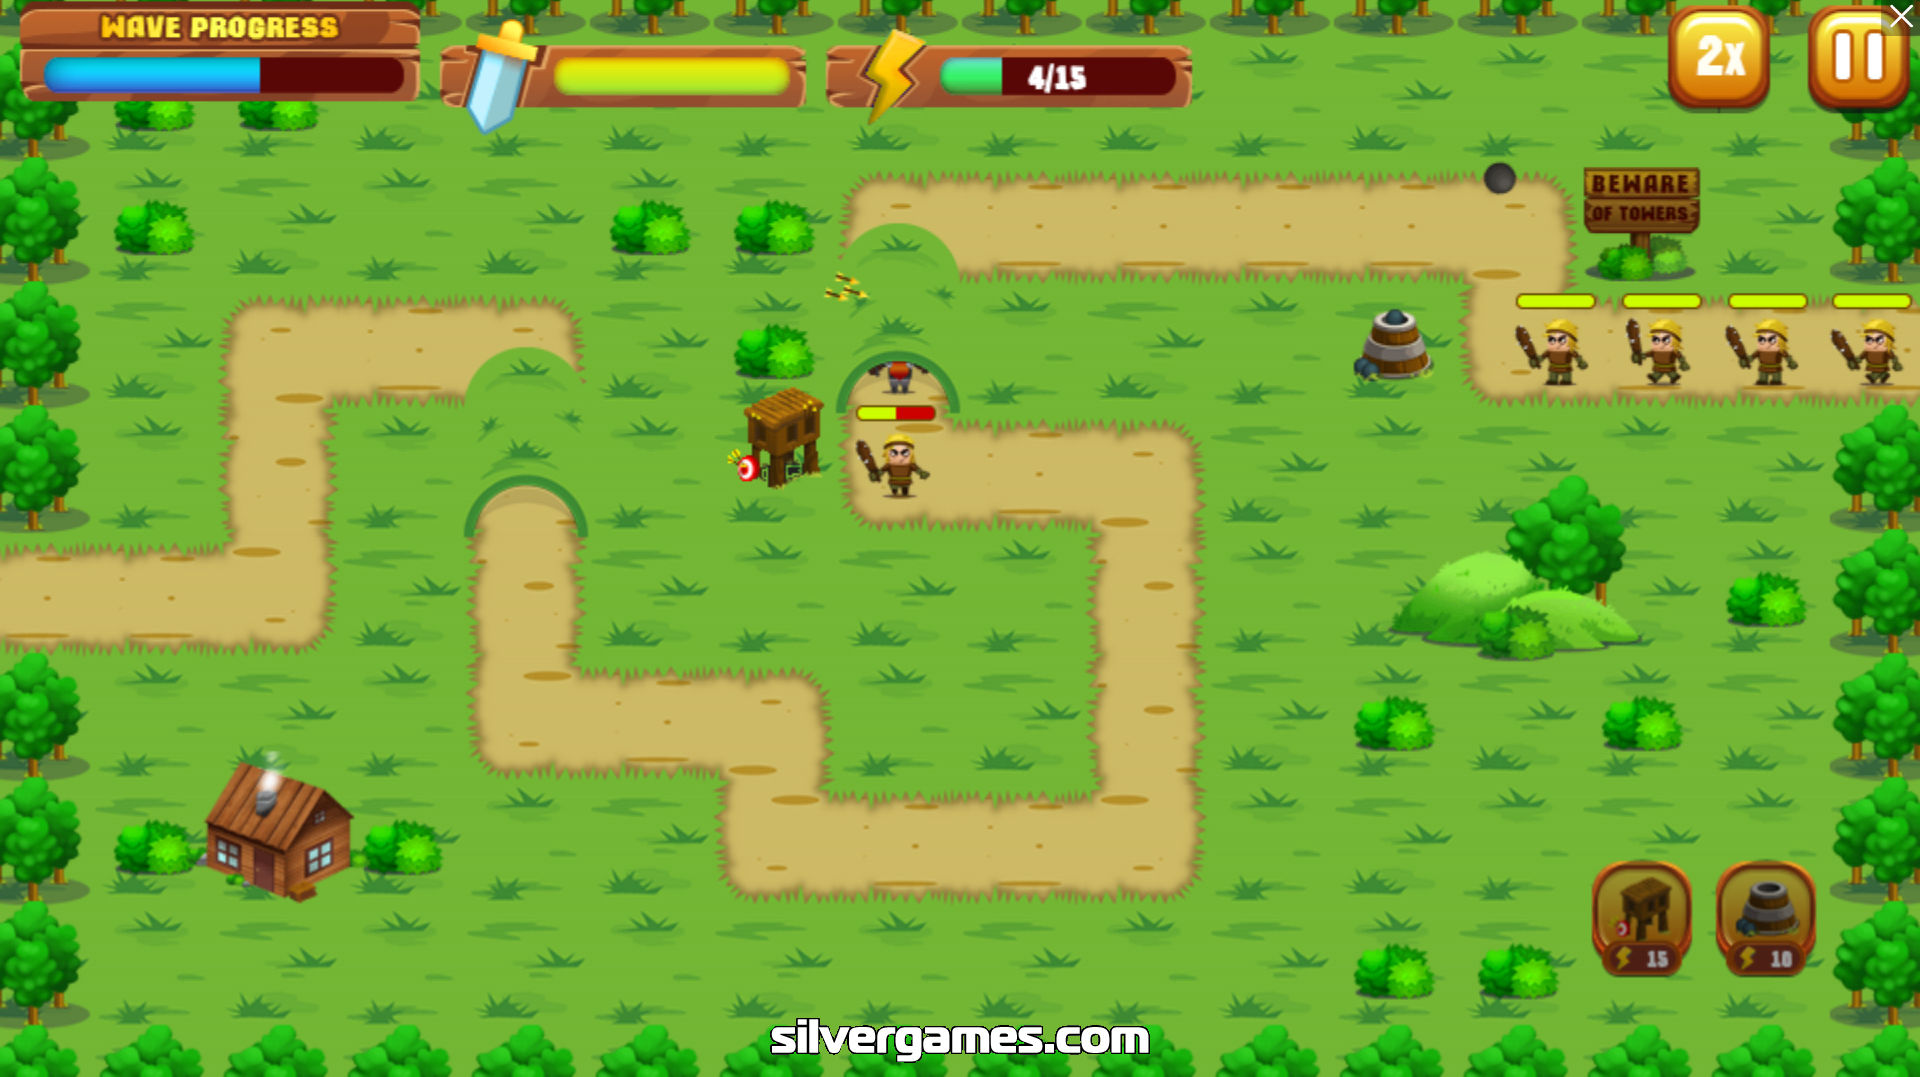 Go Online - Play Online on SilverGames 🕹️